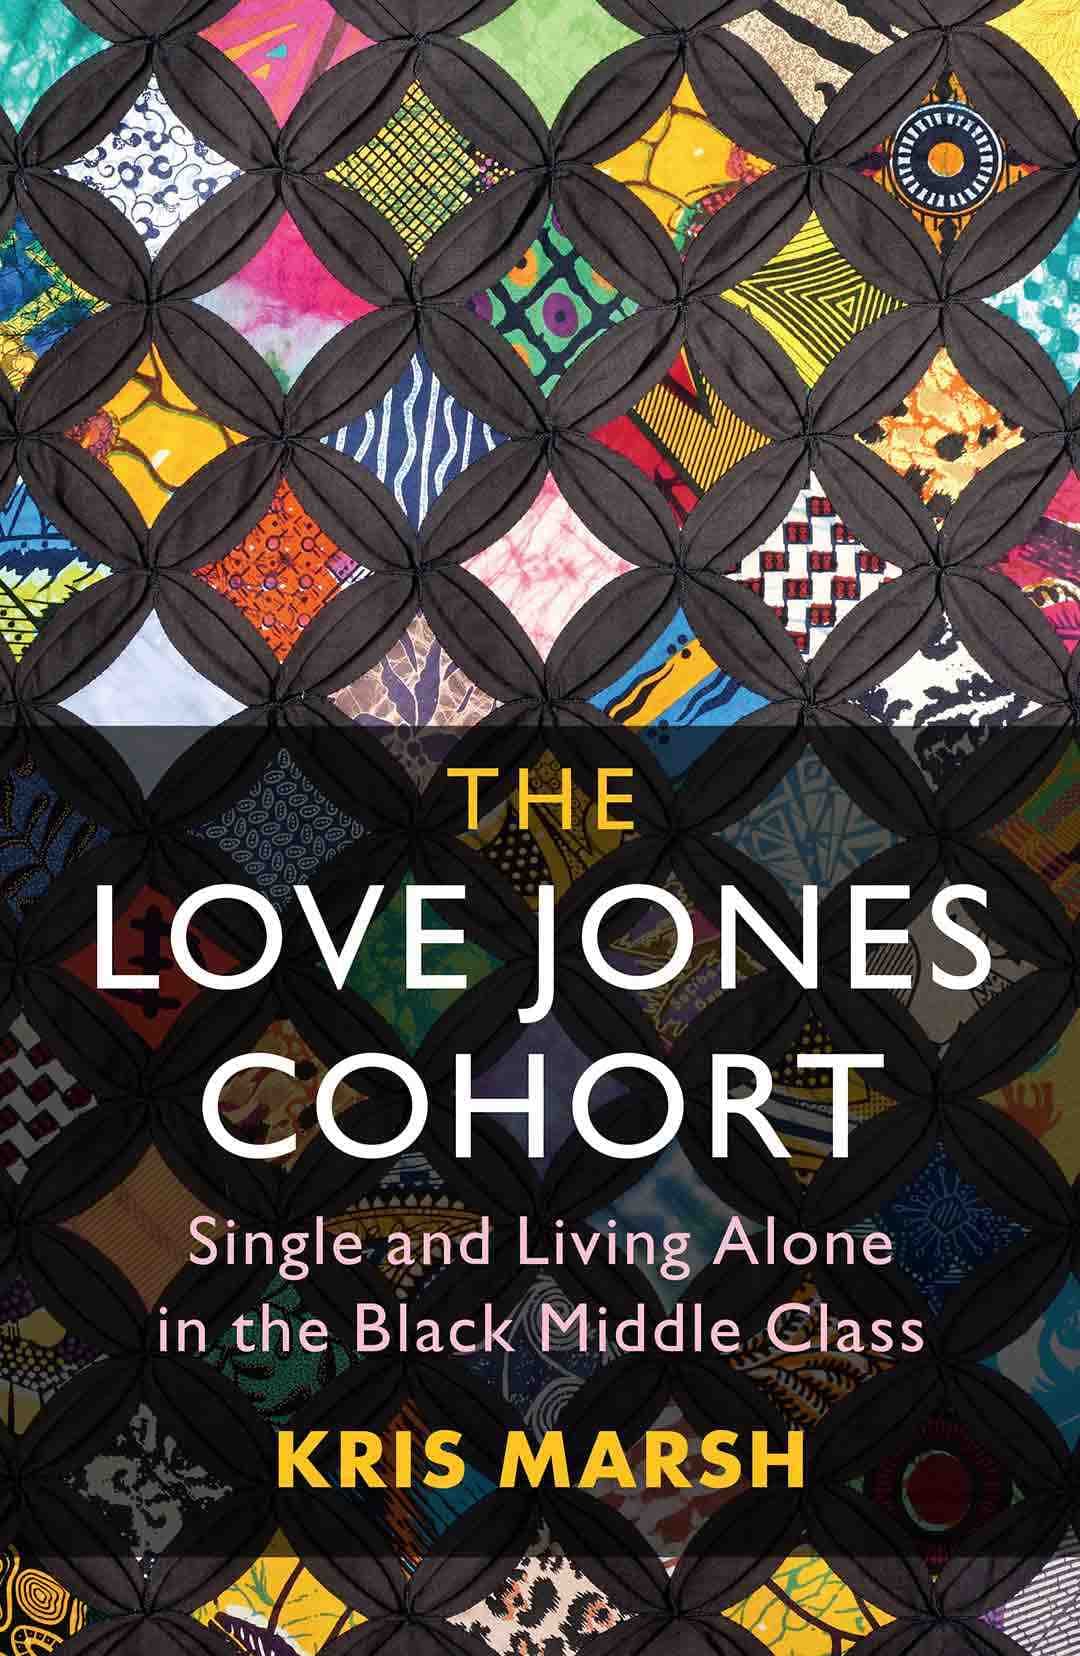 "The Love Jones Cohort" book cover